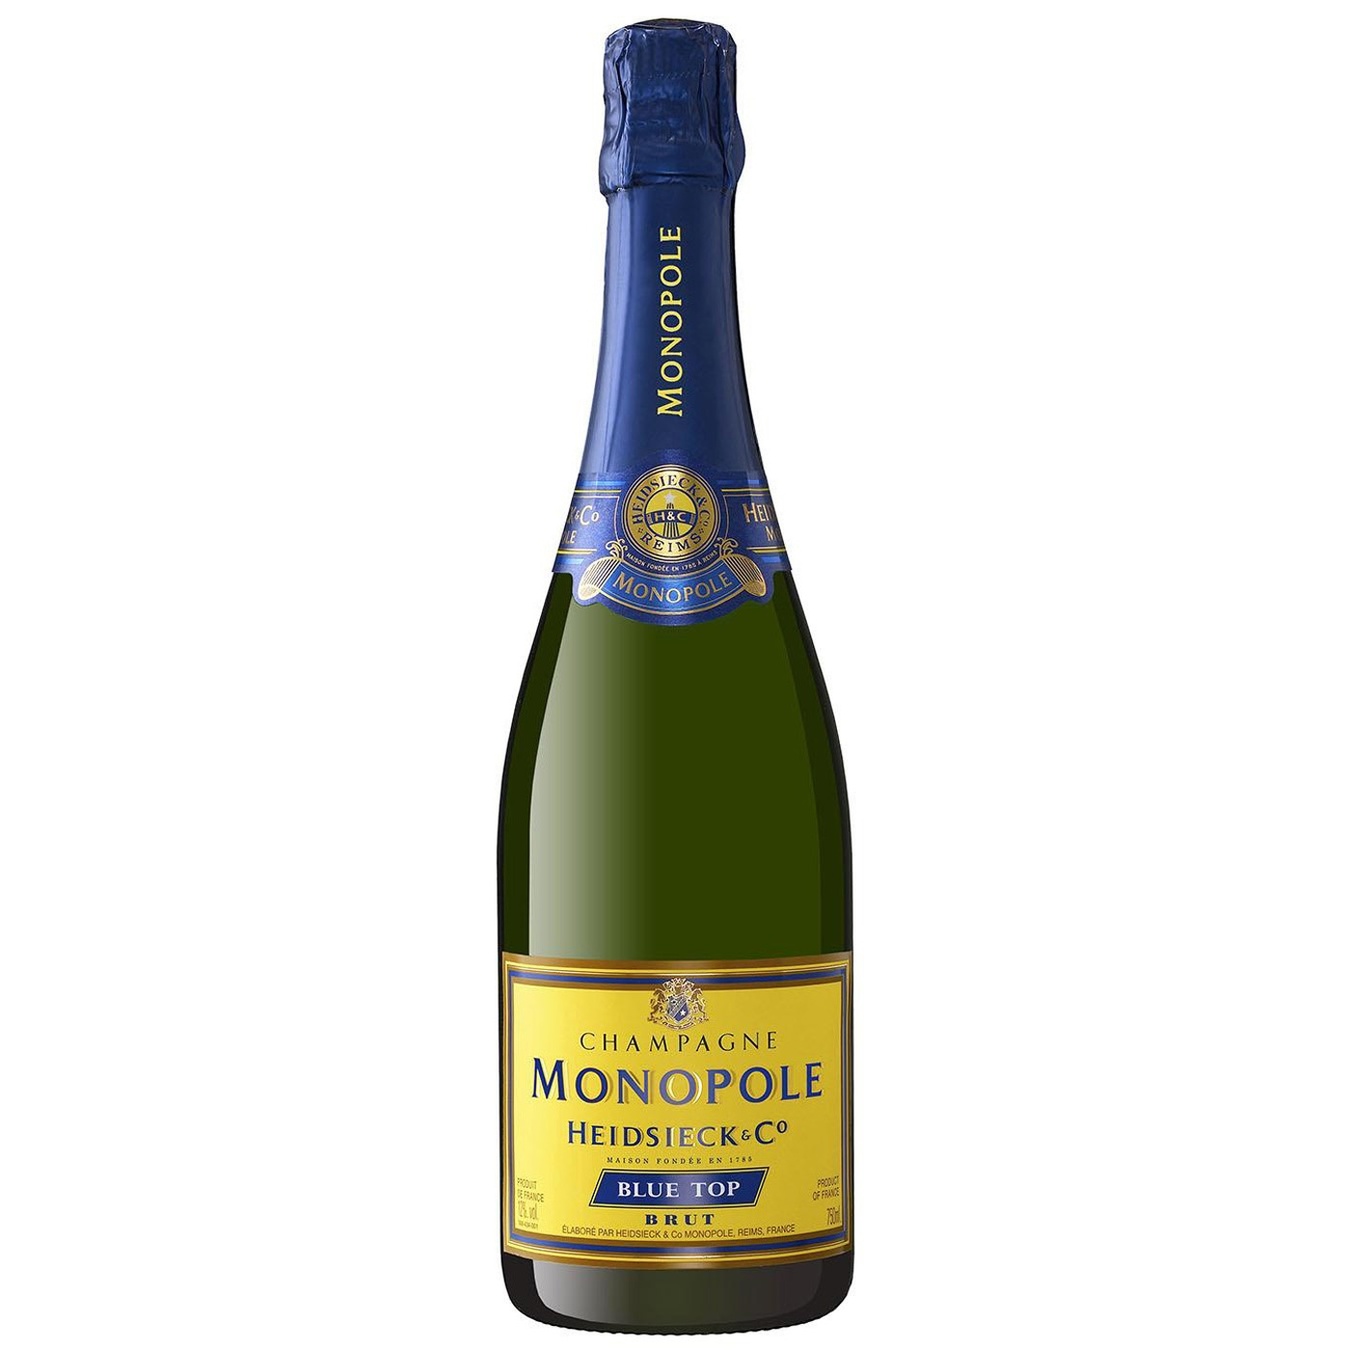 Champagne Heidsieck Monopole Blue Top white brut 12.5% 0.75l